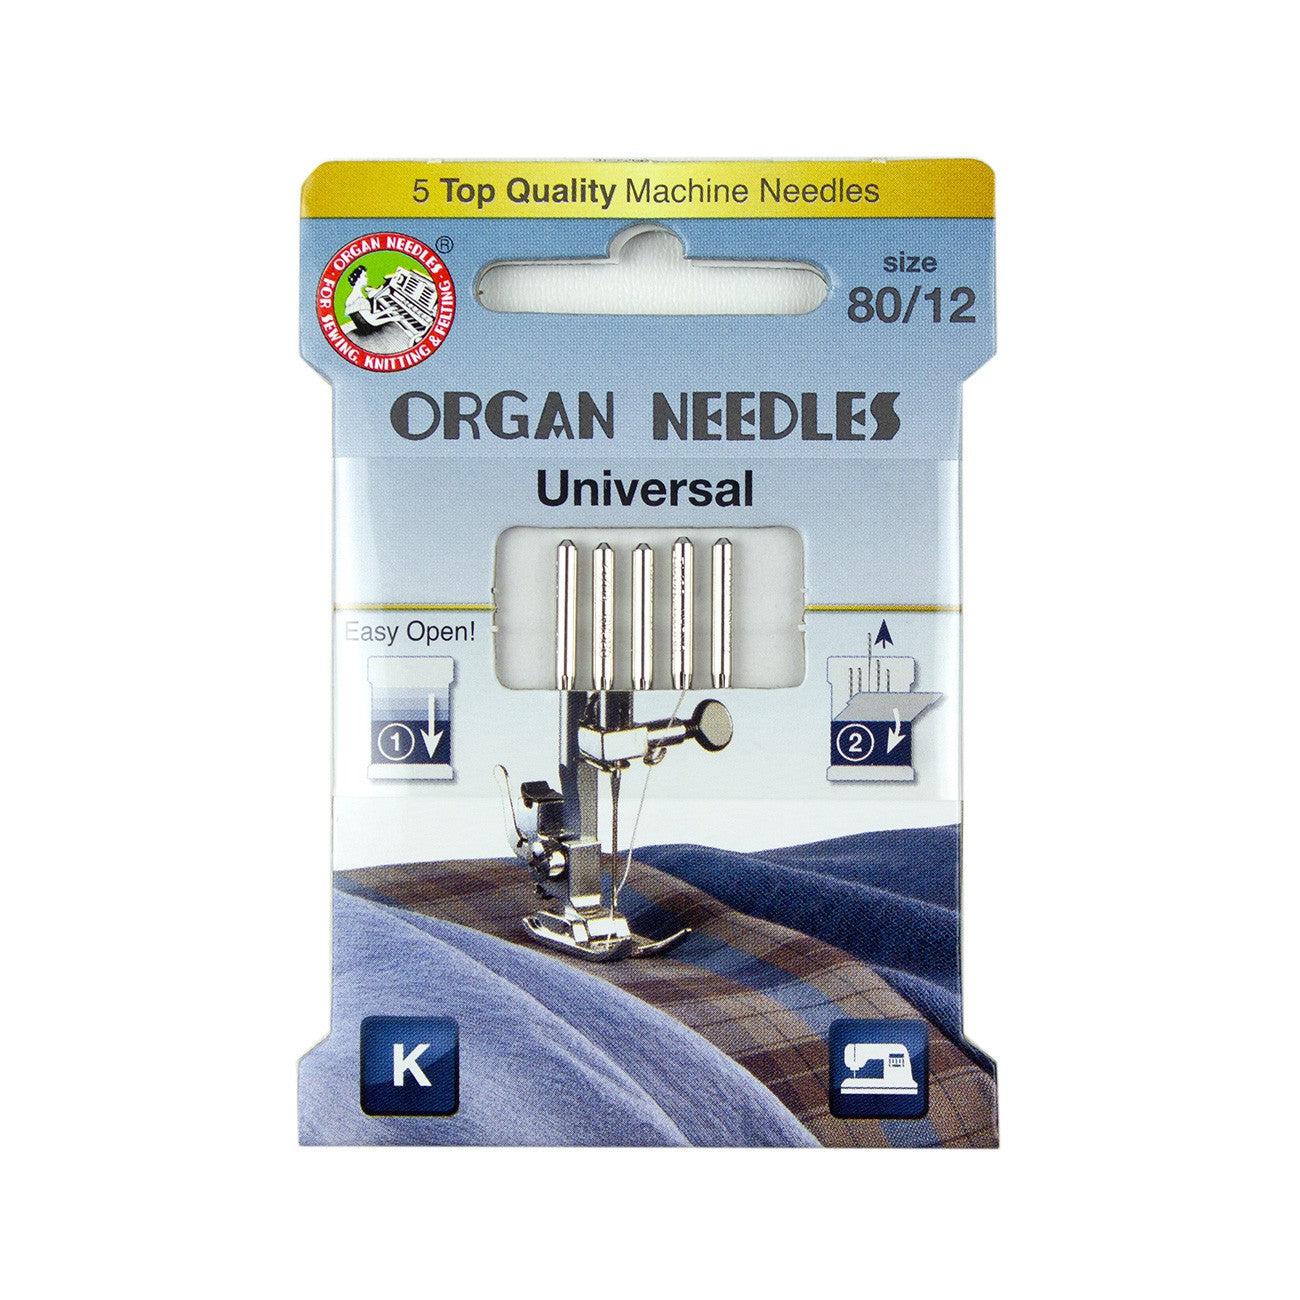 Organ Needles Universal Size 80/12 Eco Pack-Organ Needles-My Favorite Quilt Store